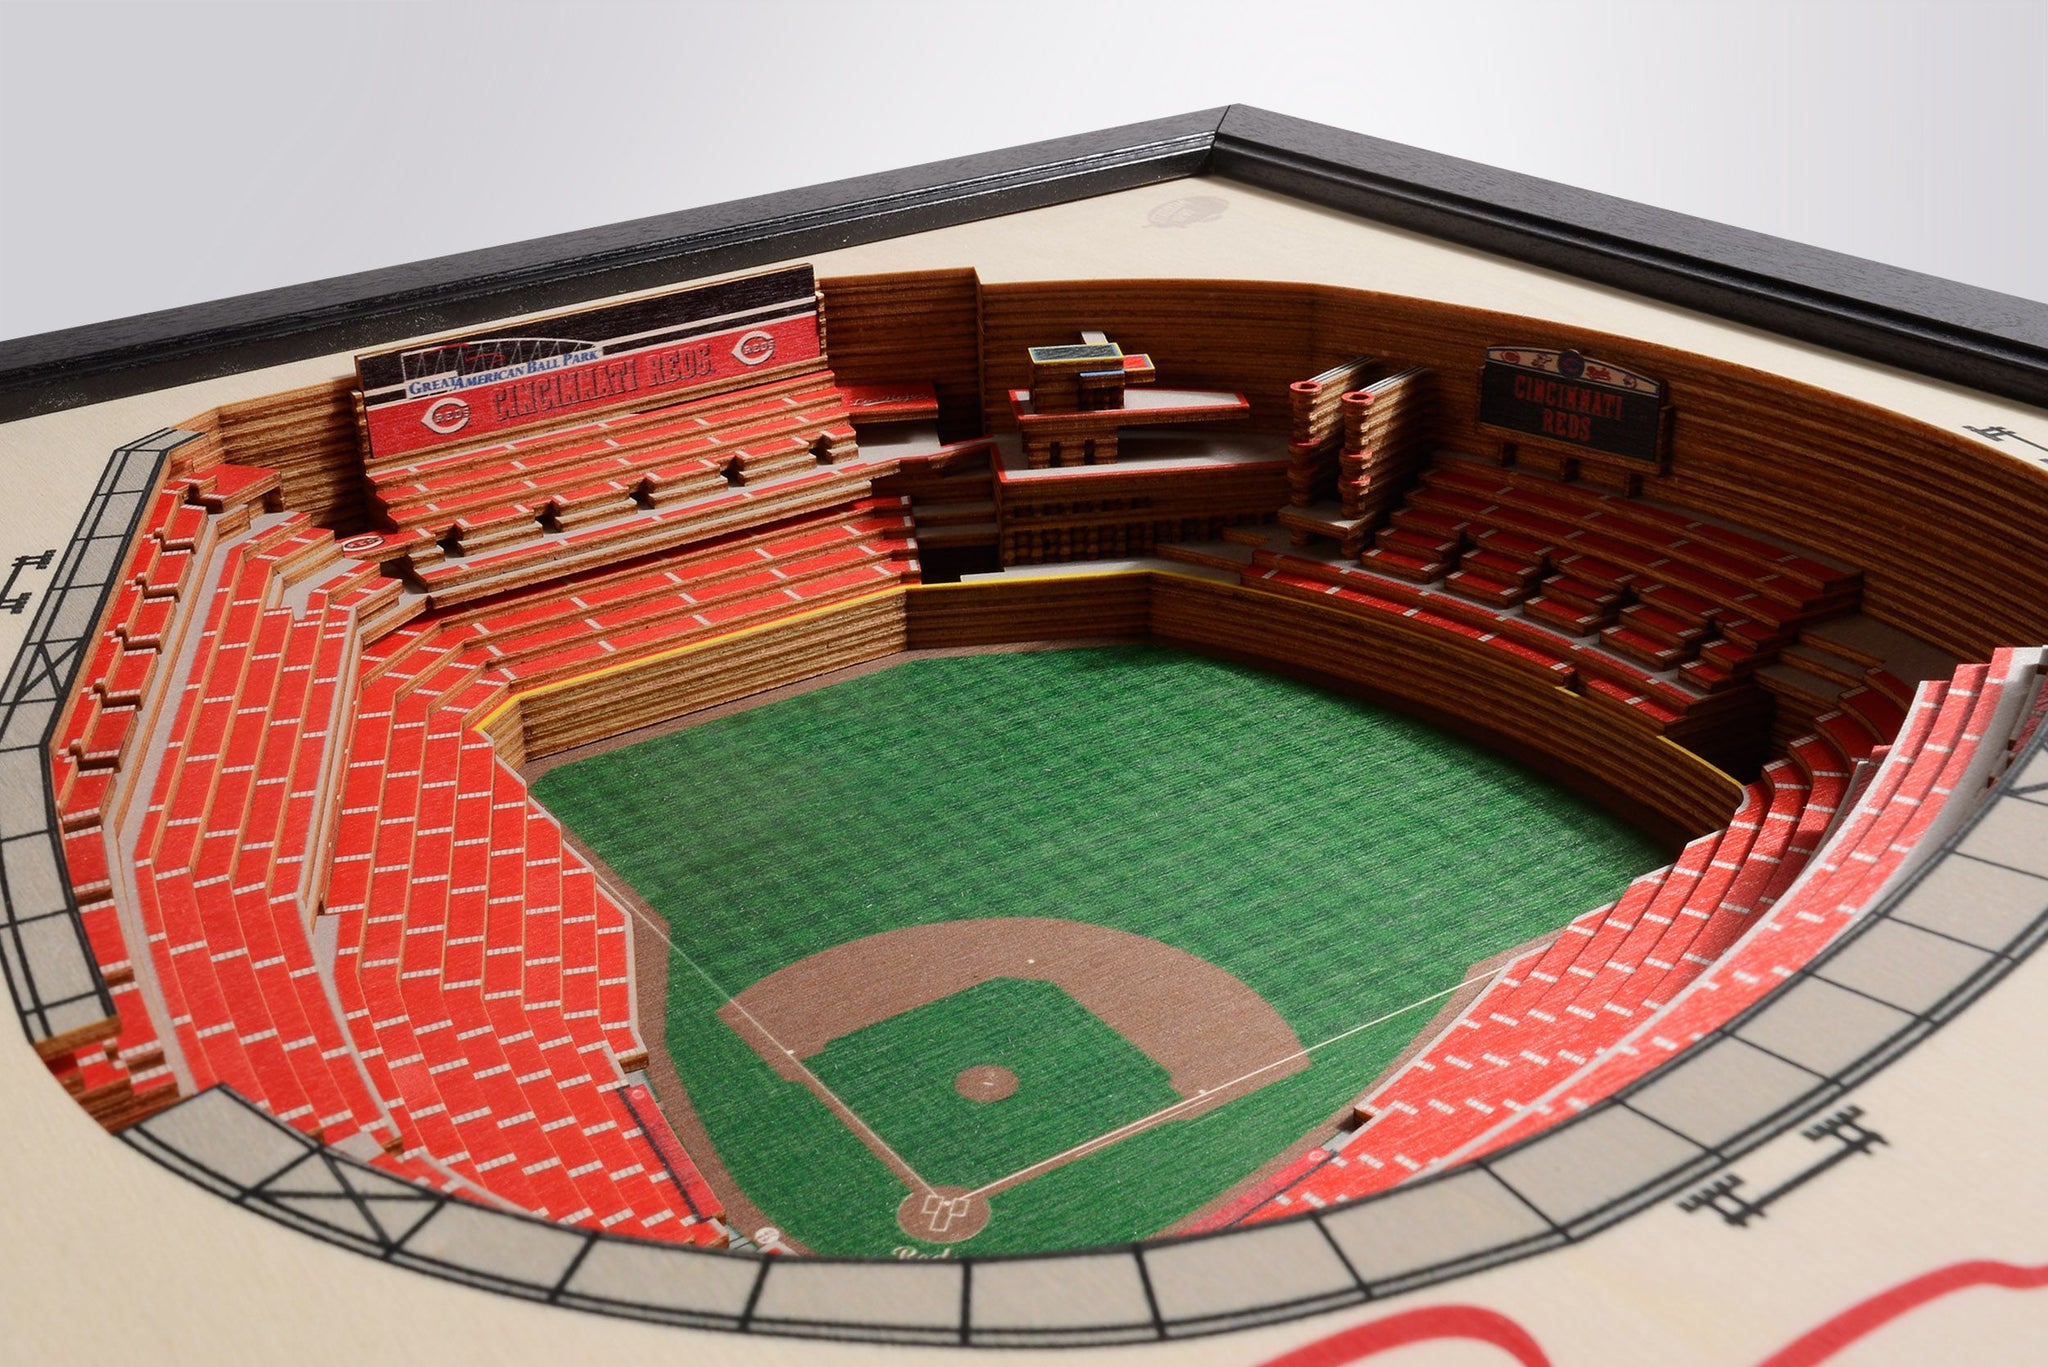 Great American Ball Park Baseball Stadium Print, Cincinnati Reds